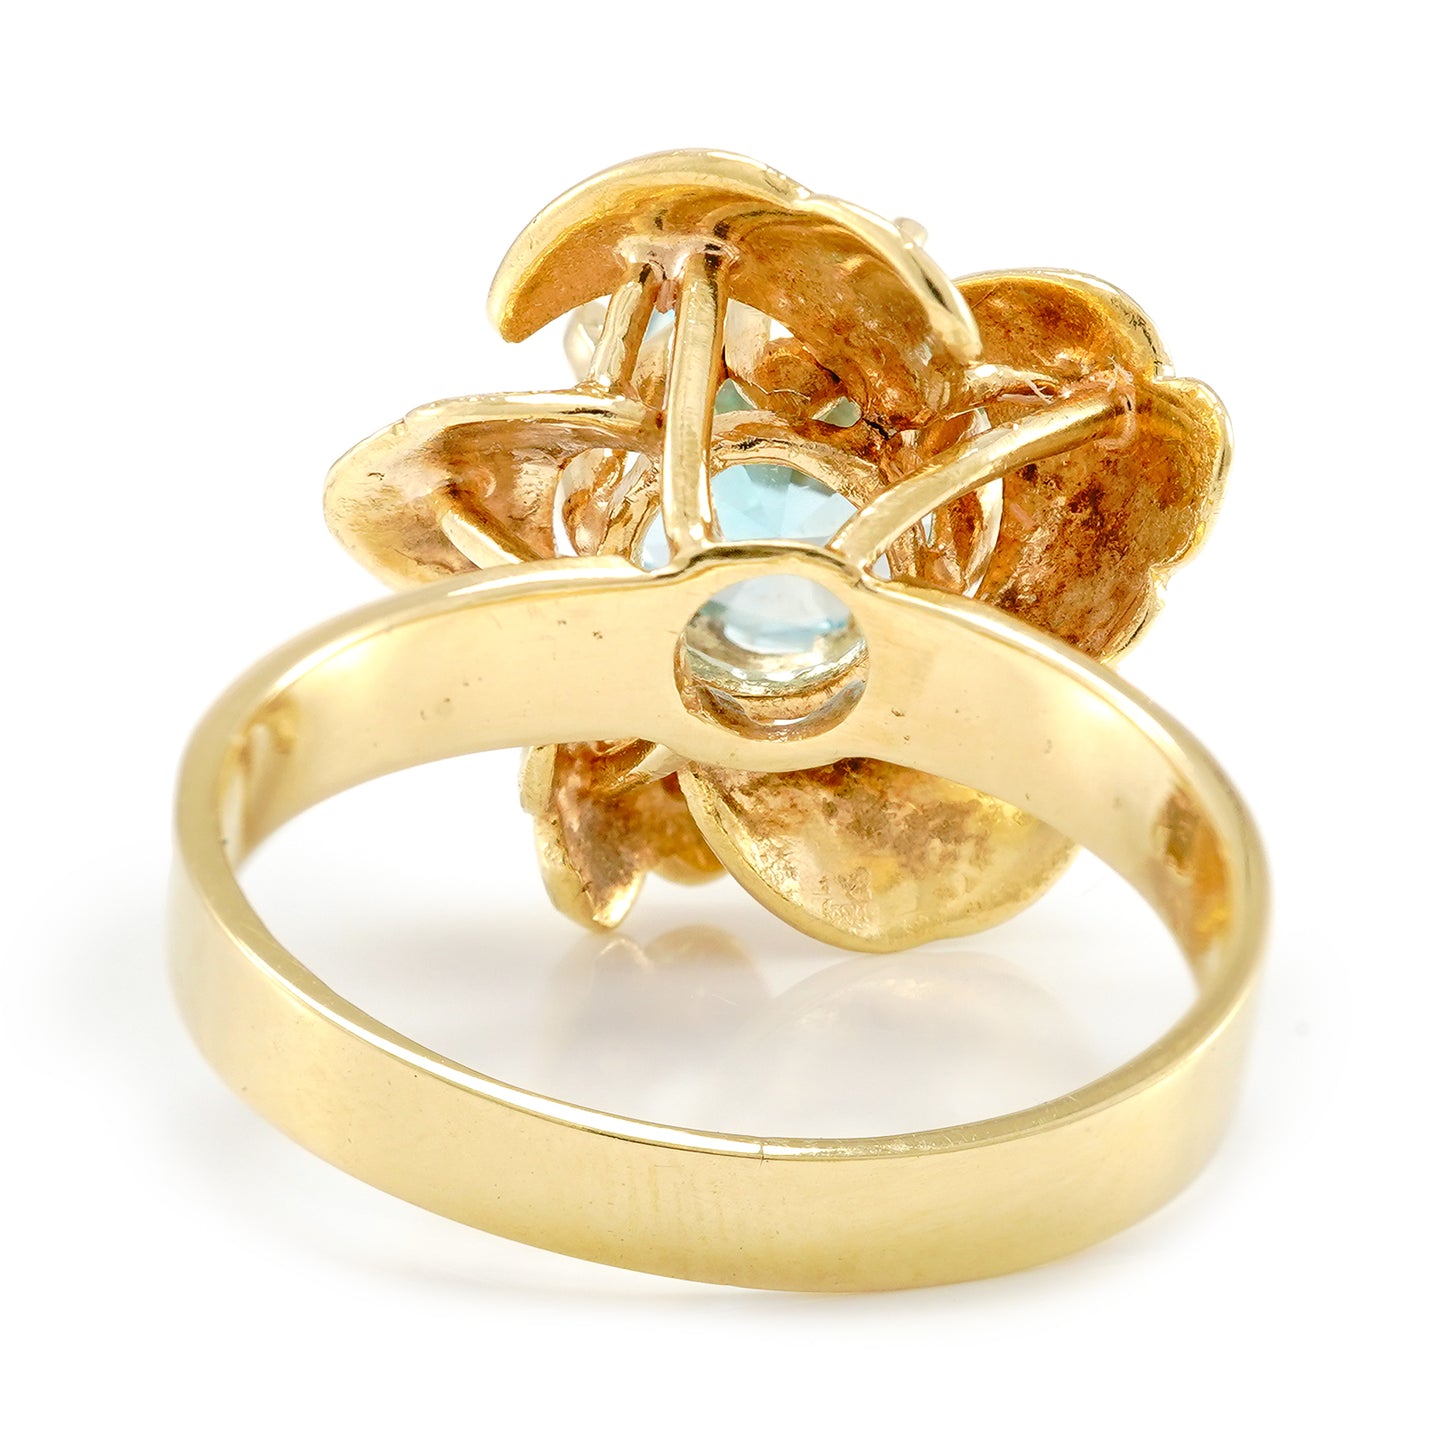 Blue gemstone ring blue topaz 585 gold women's jewelry gold ring gemstone ring